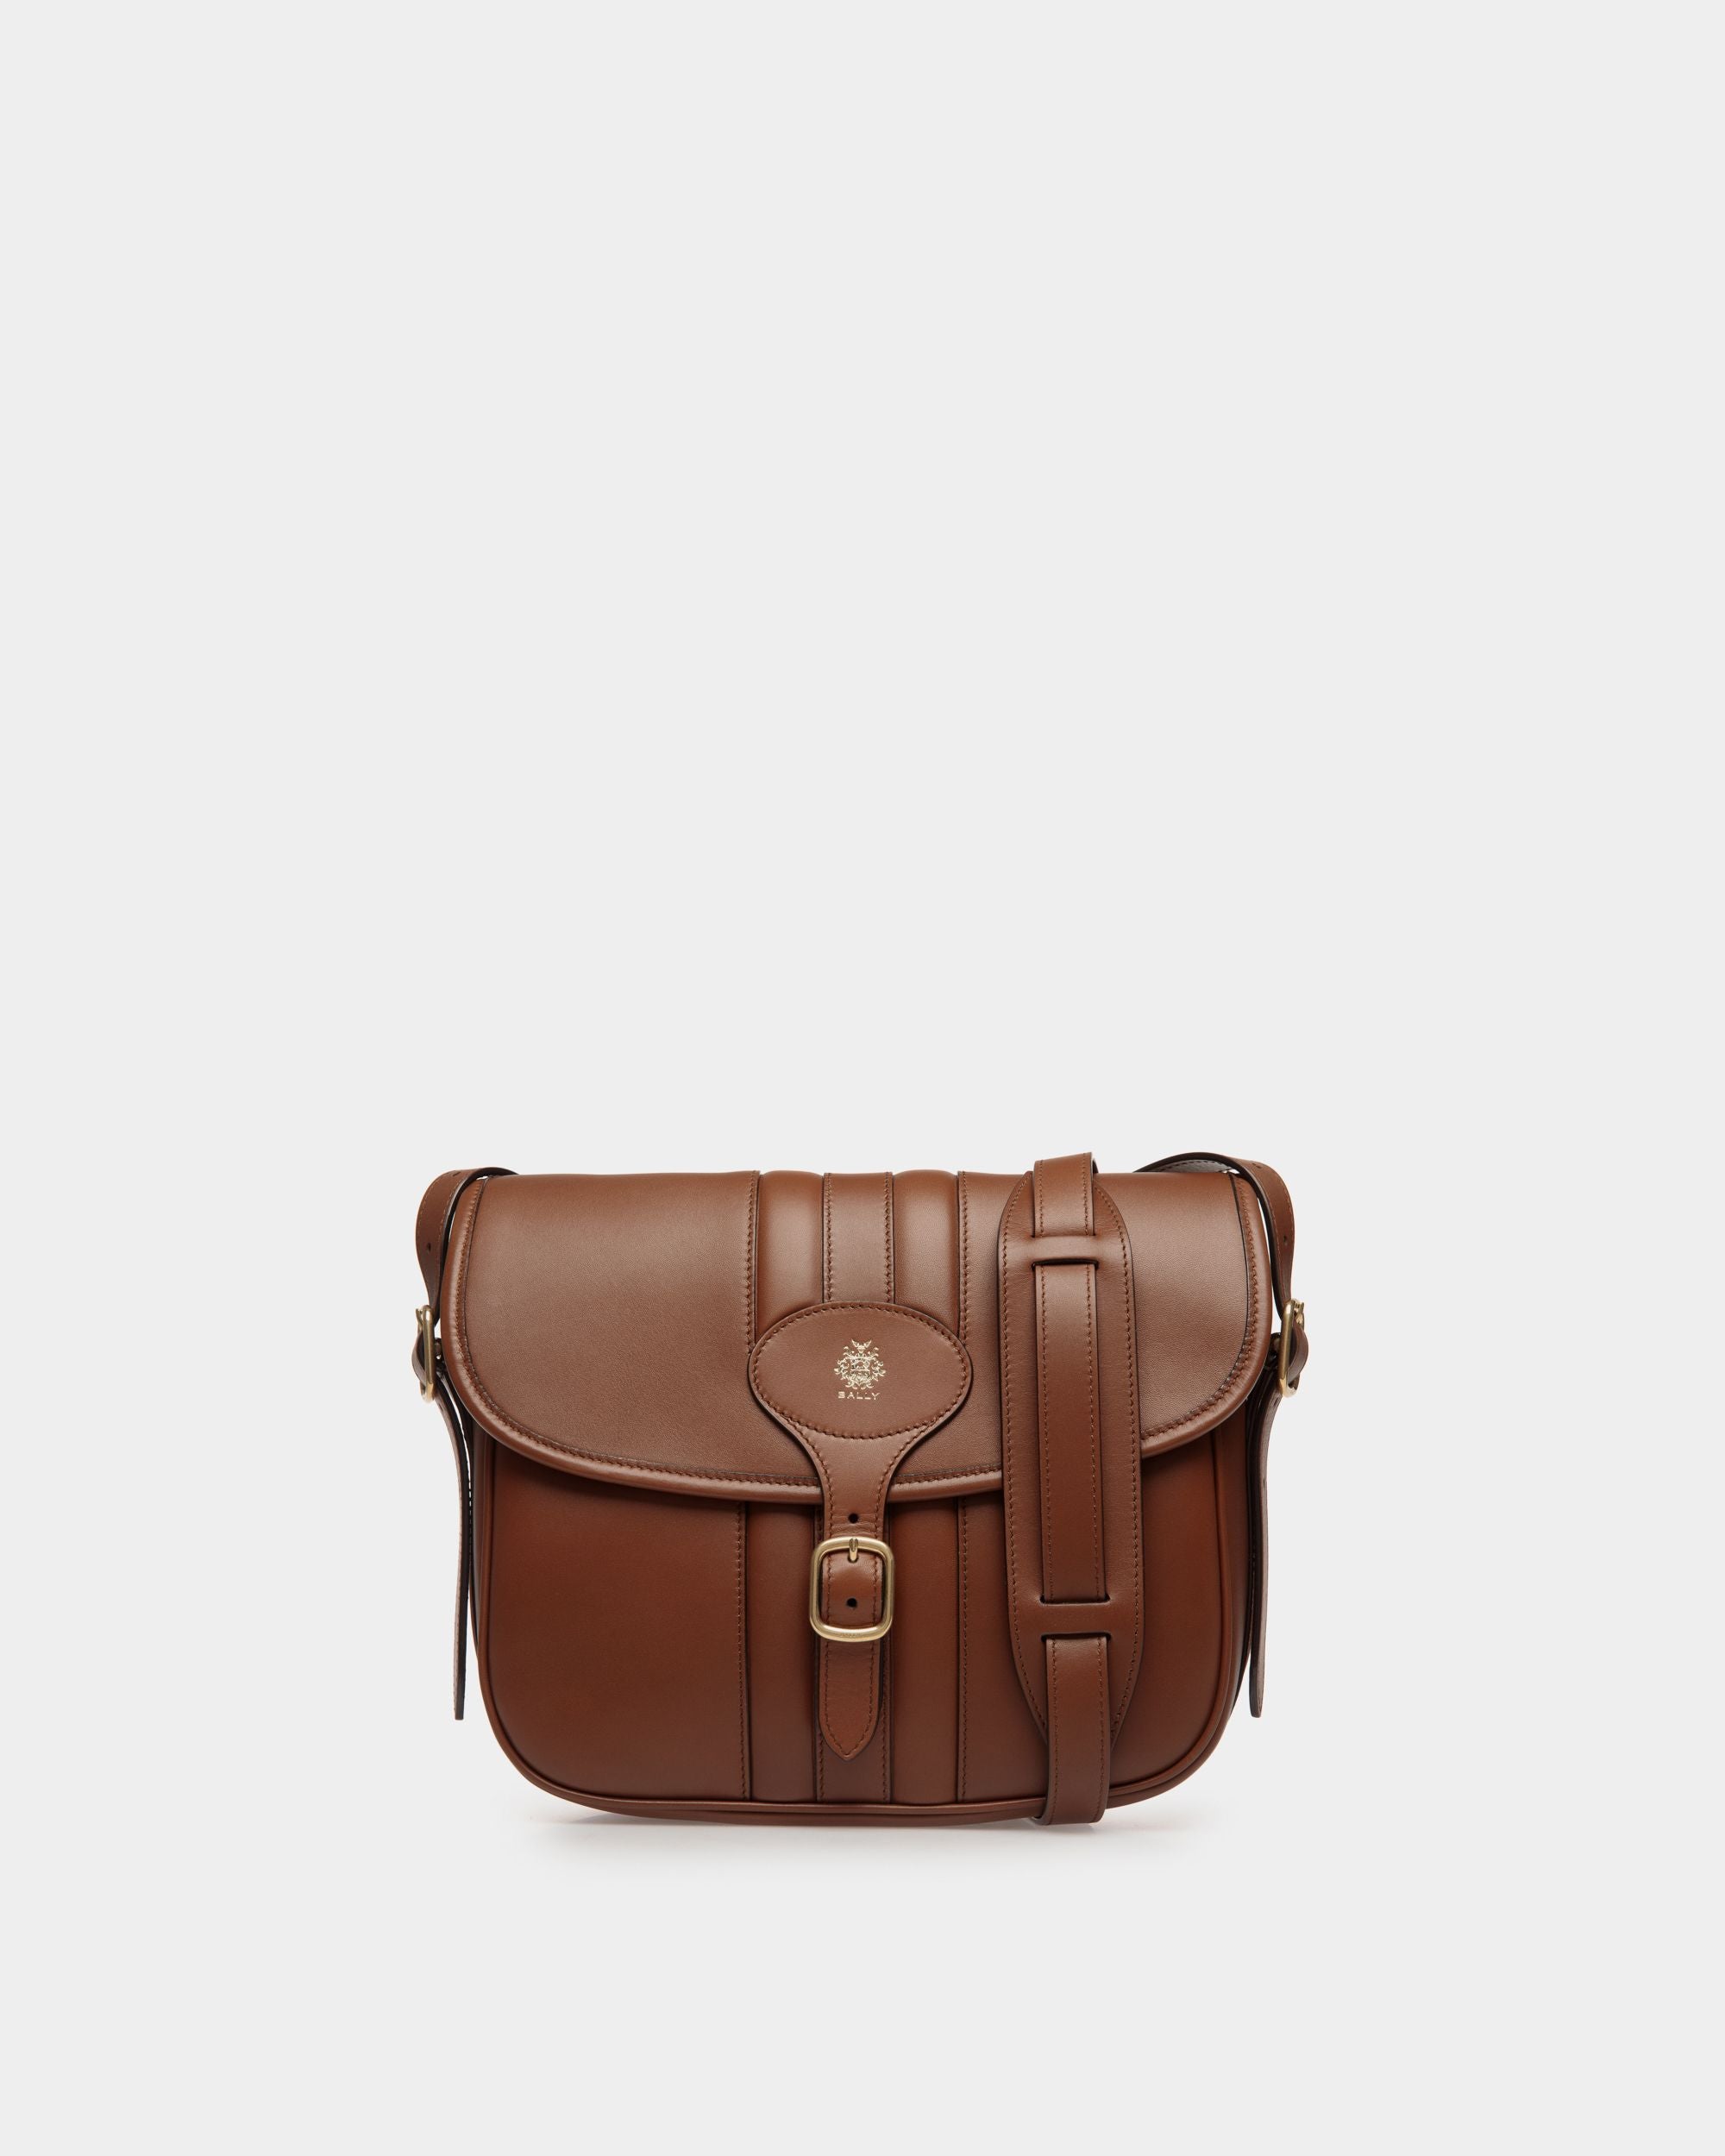 Men's Beckett Crossbody Bag in Brown Leather | Bally | Still Life Front